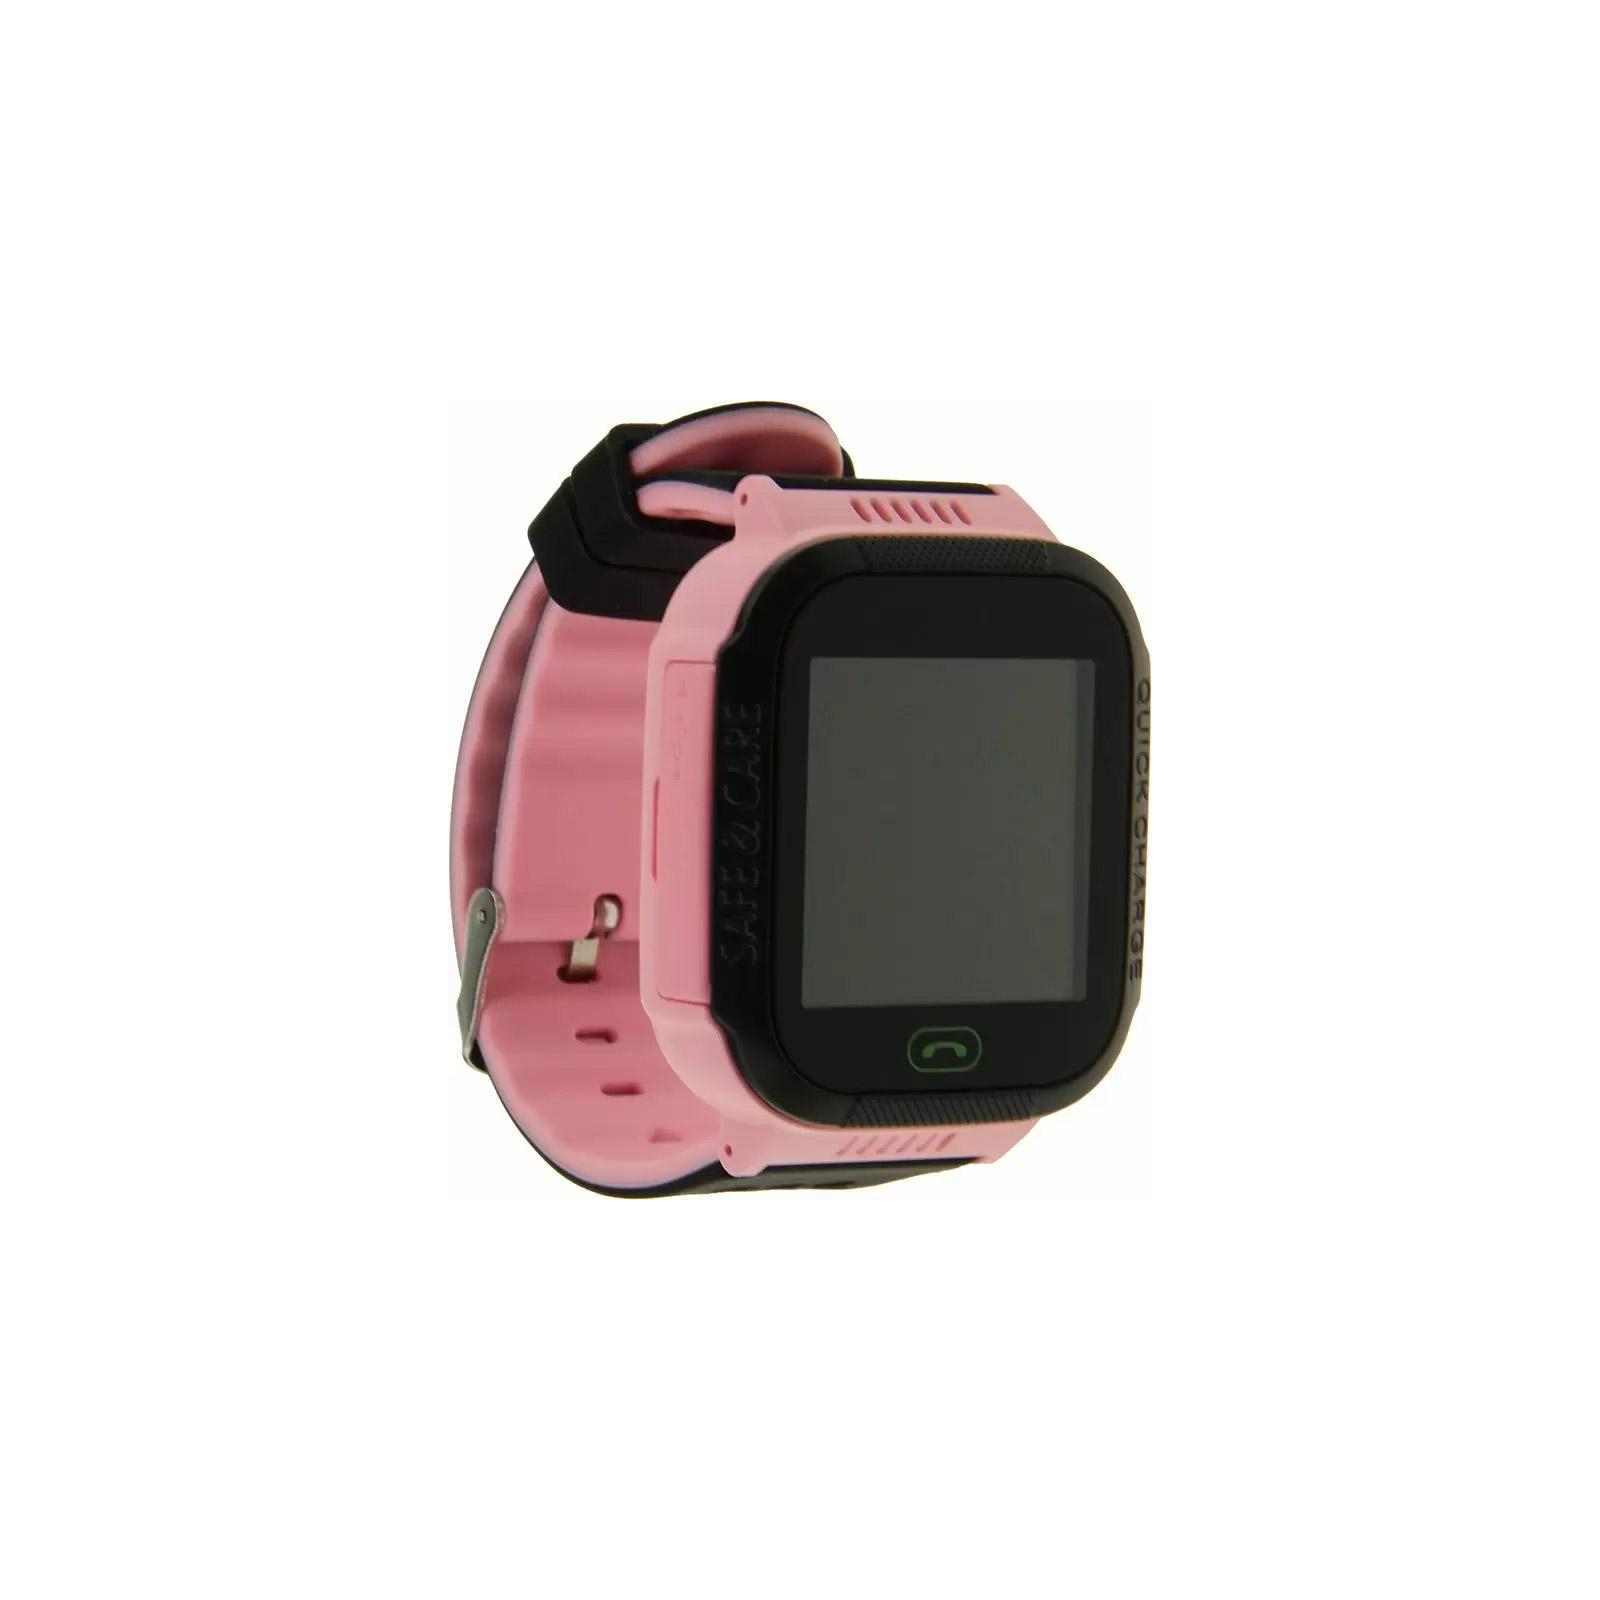 Смарт-годинник UWatch Q528 Kid smart watch Blue (F_63340) зображення 2